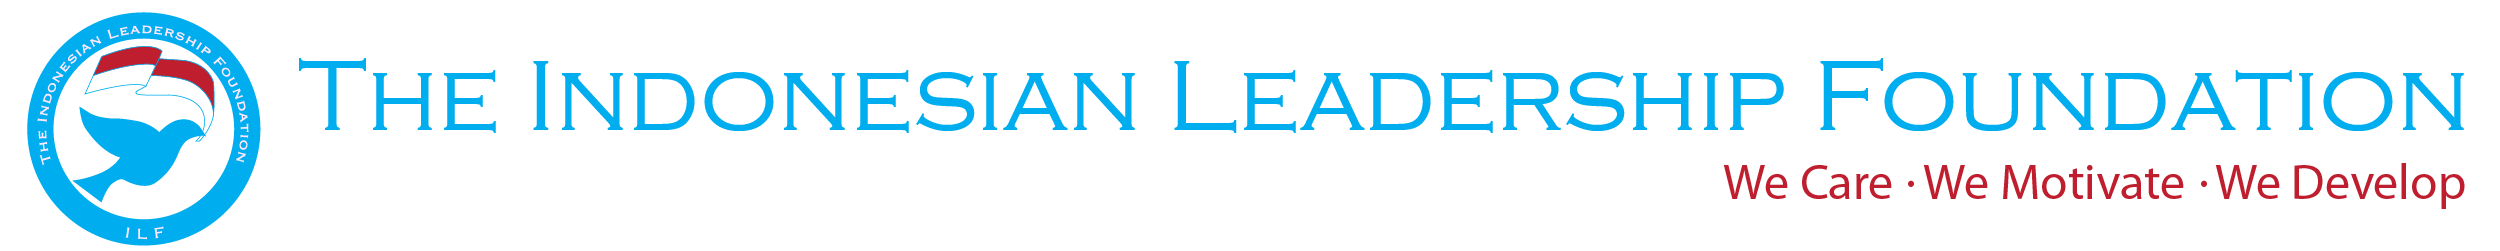 Indonesian Leadership Foundation Logo